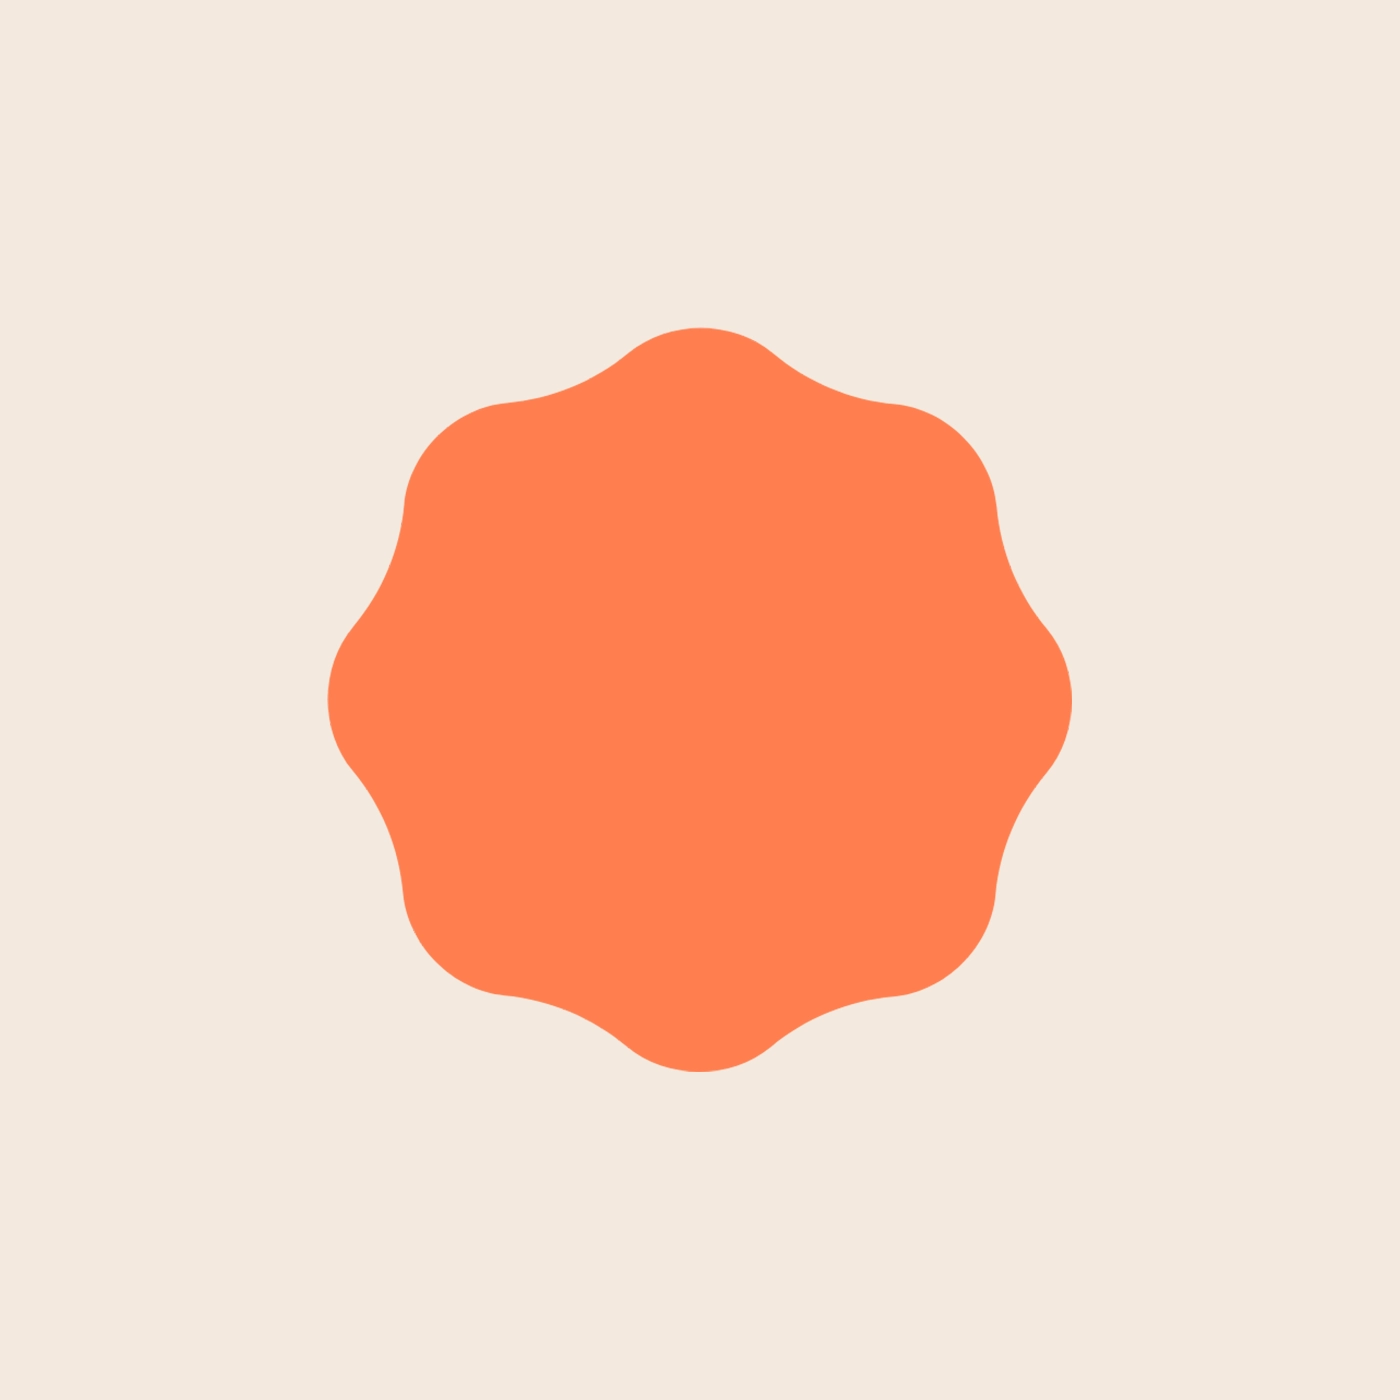 Bright orange gear solid shape graphic brand element.